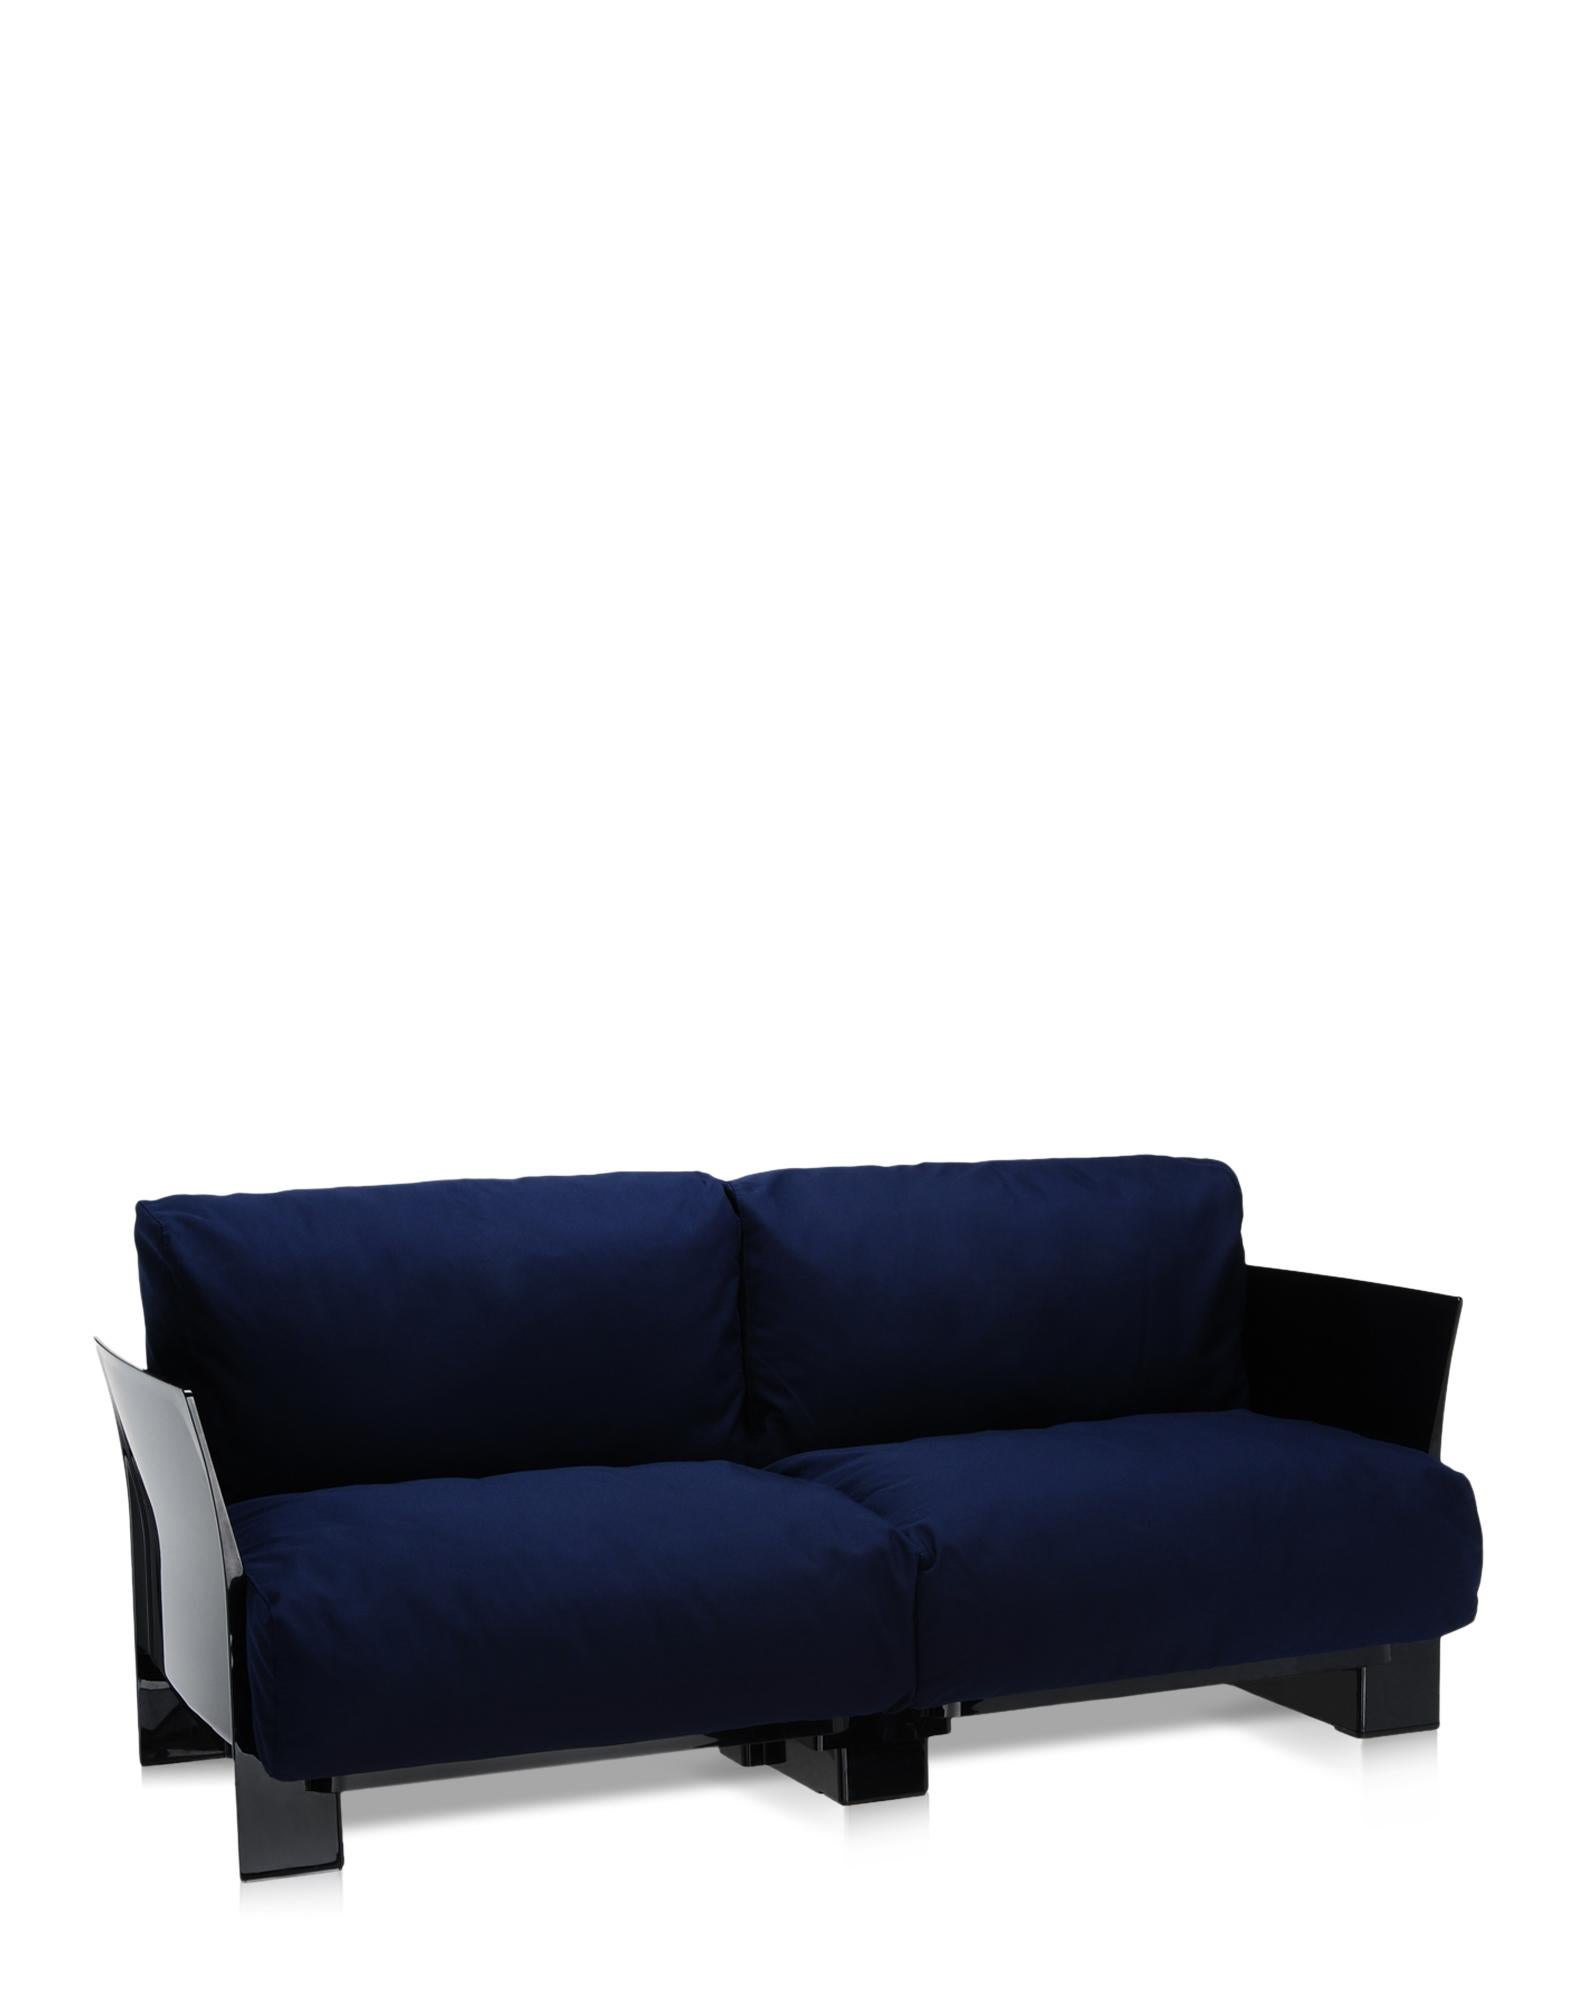 Modern Kartell Pop Outdoor Sofa in Sunbrella Blue by Piero Lissoni For Sale